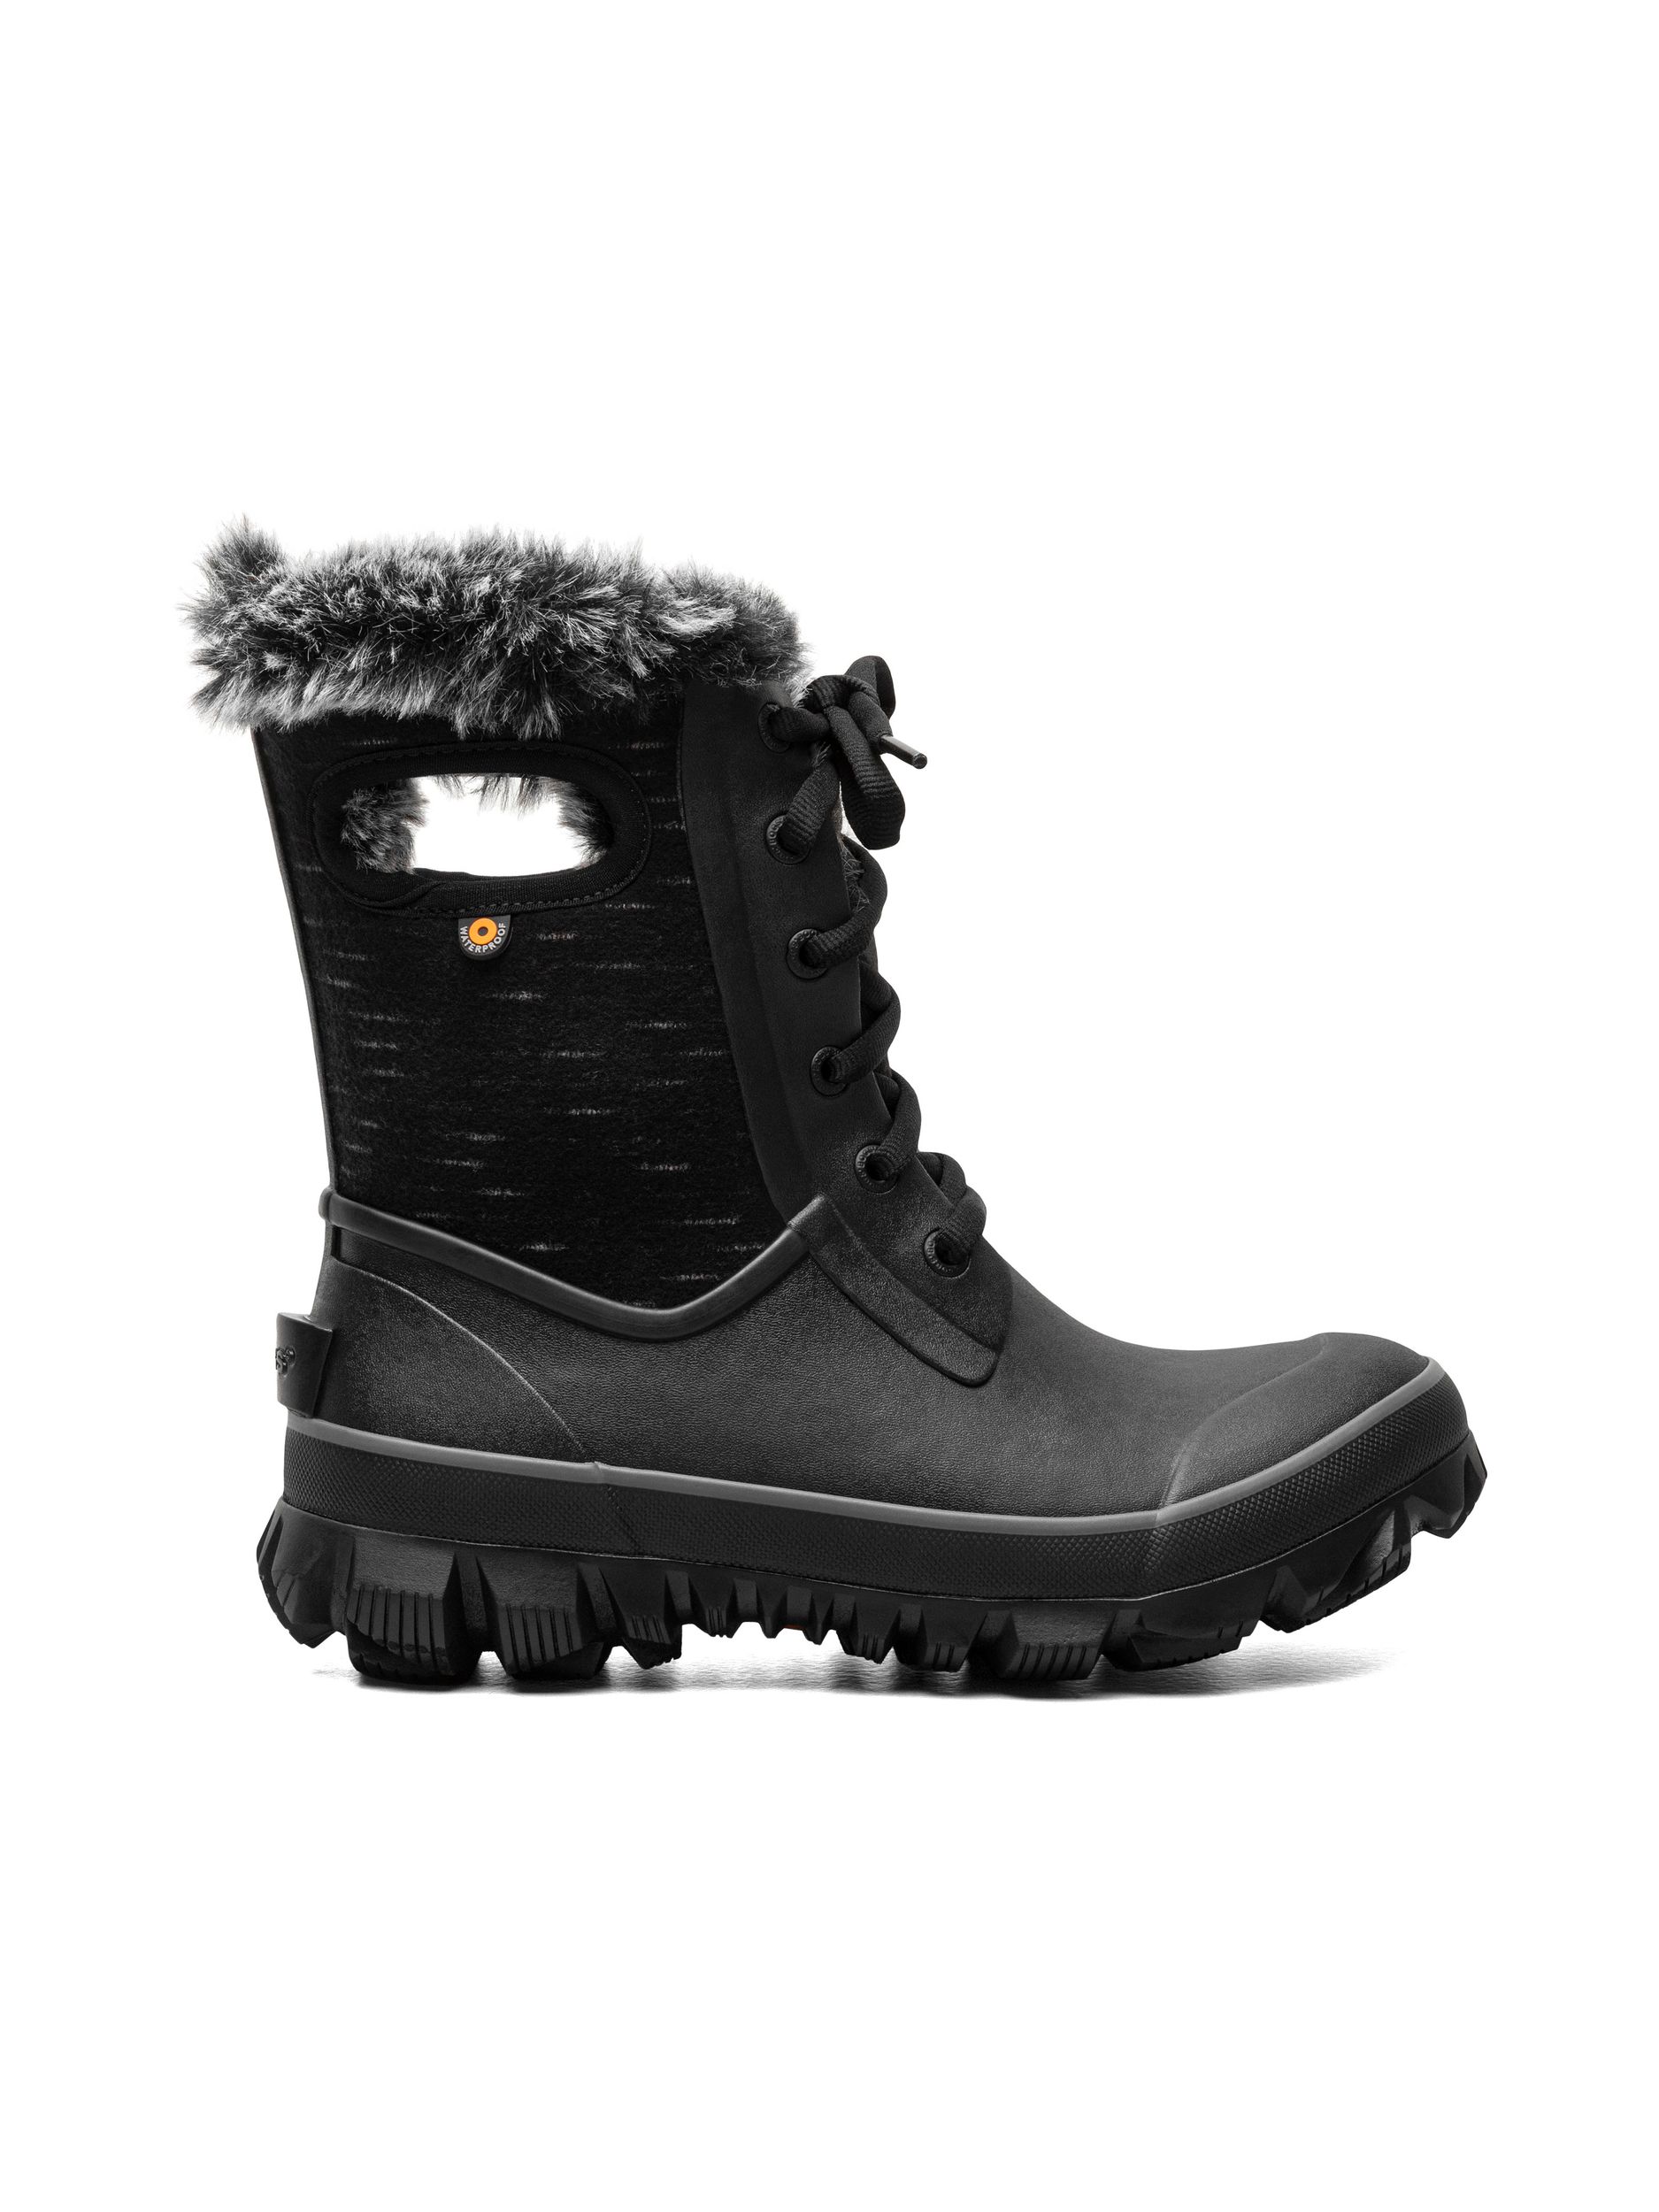 Image of Bogs Women's Arcata Dash Winter Boots